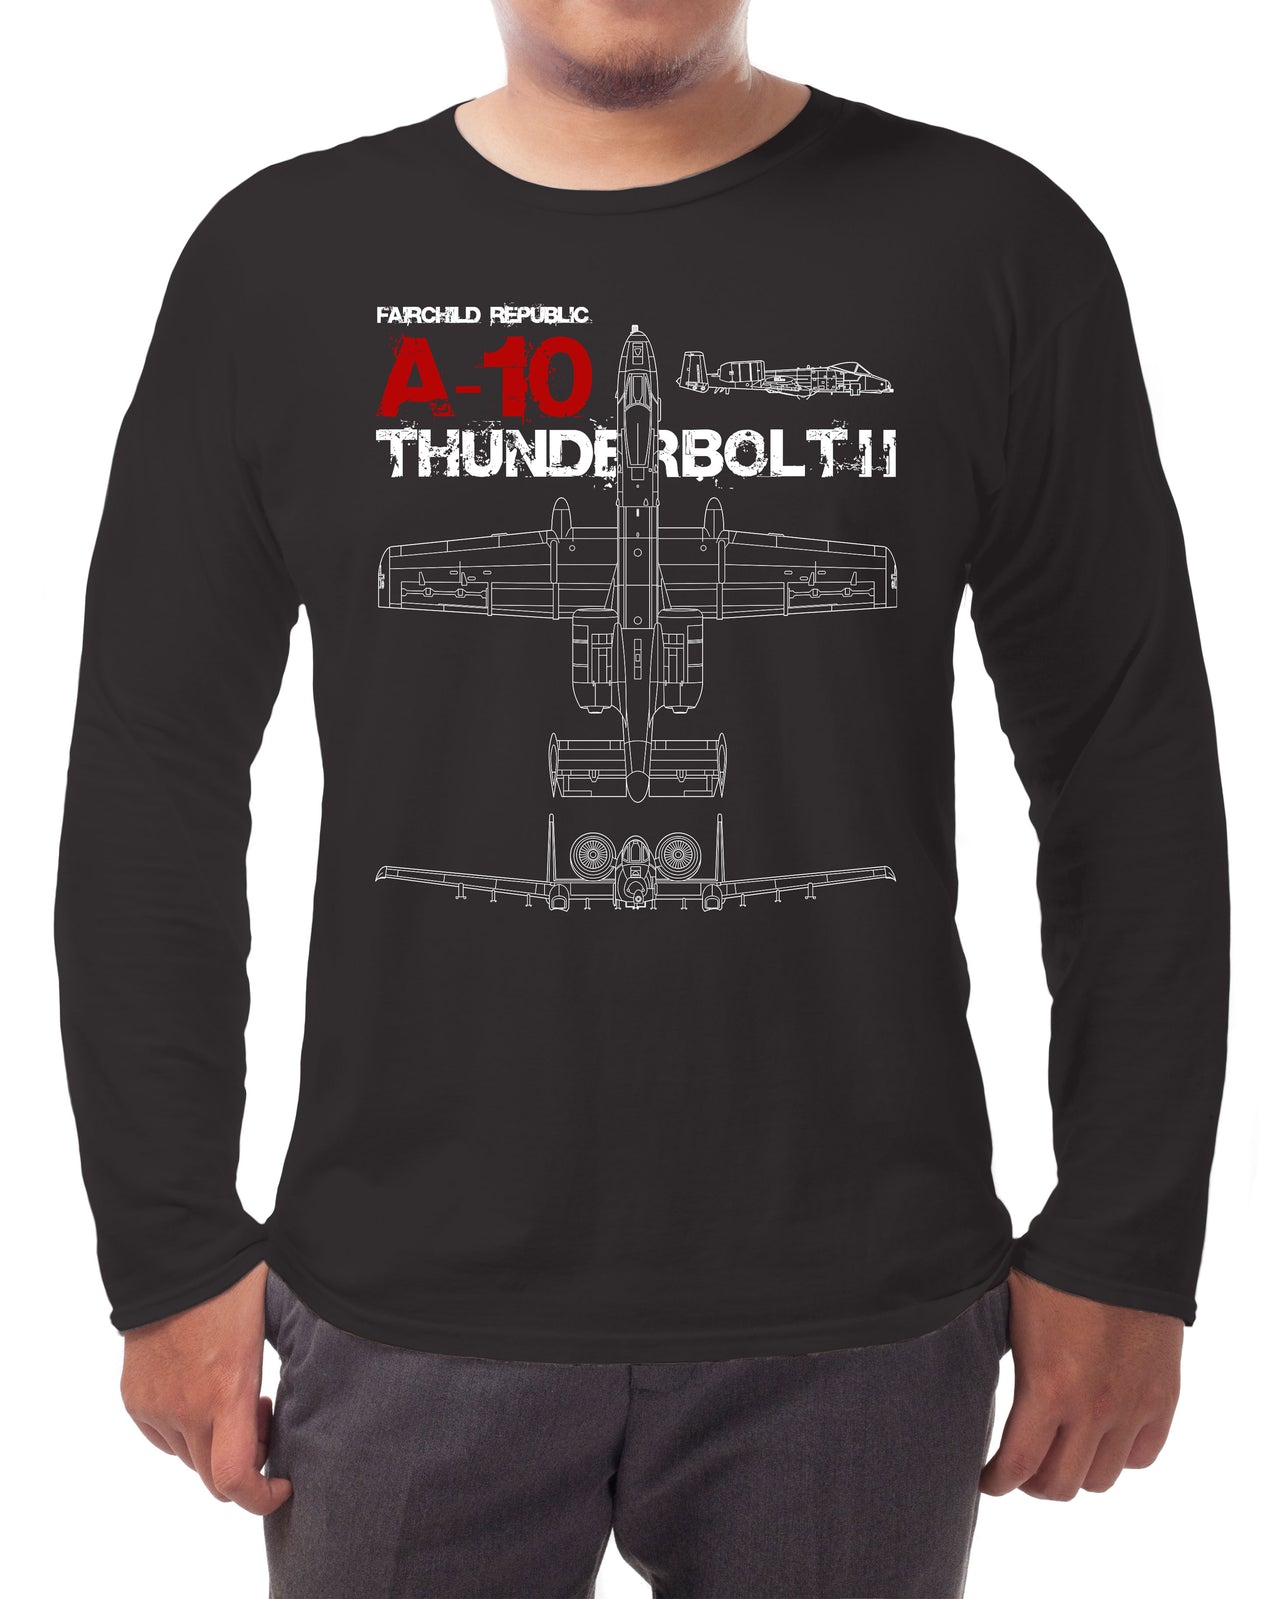 A-10 Thunderbolt II - Long-sleeve T-shirt